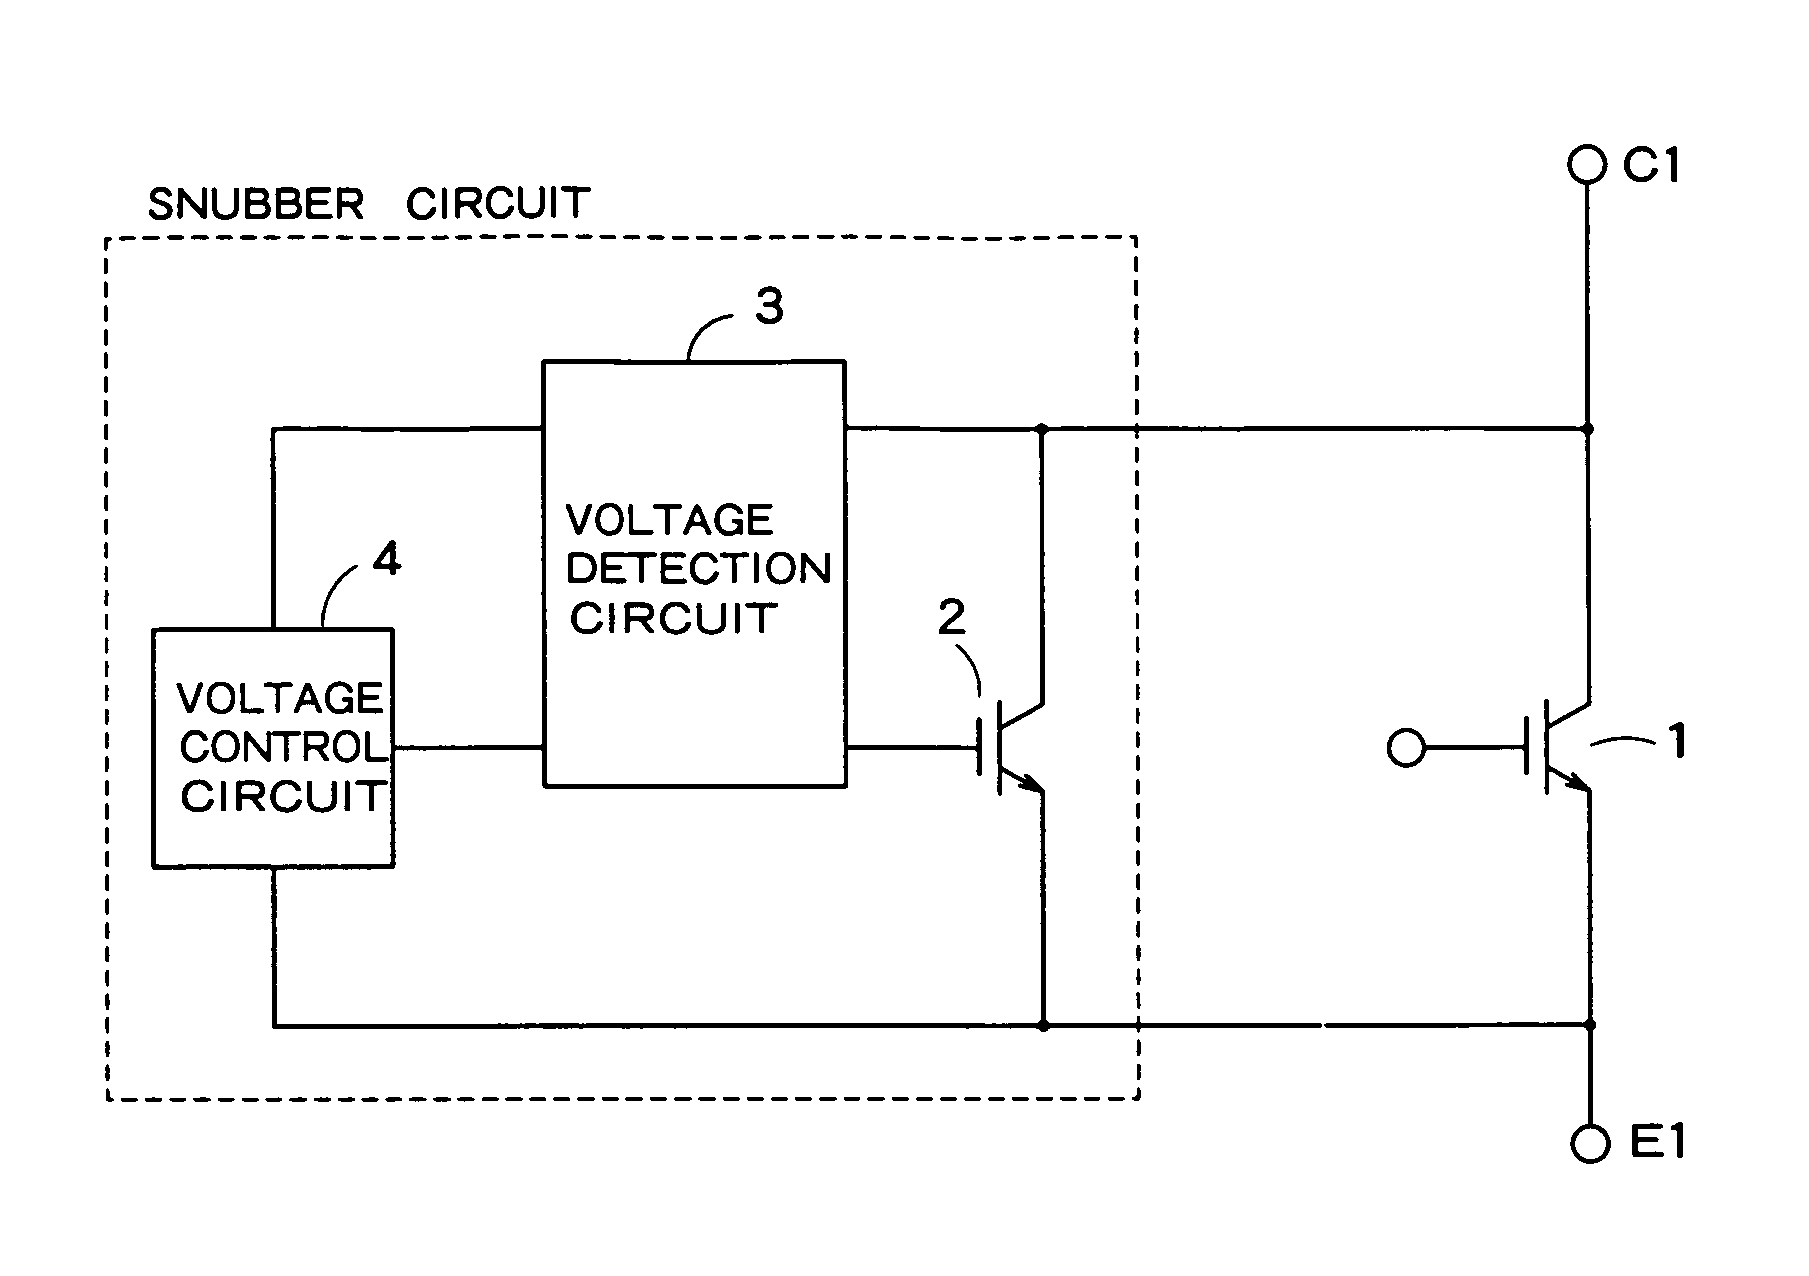 Snubber circuit